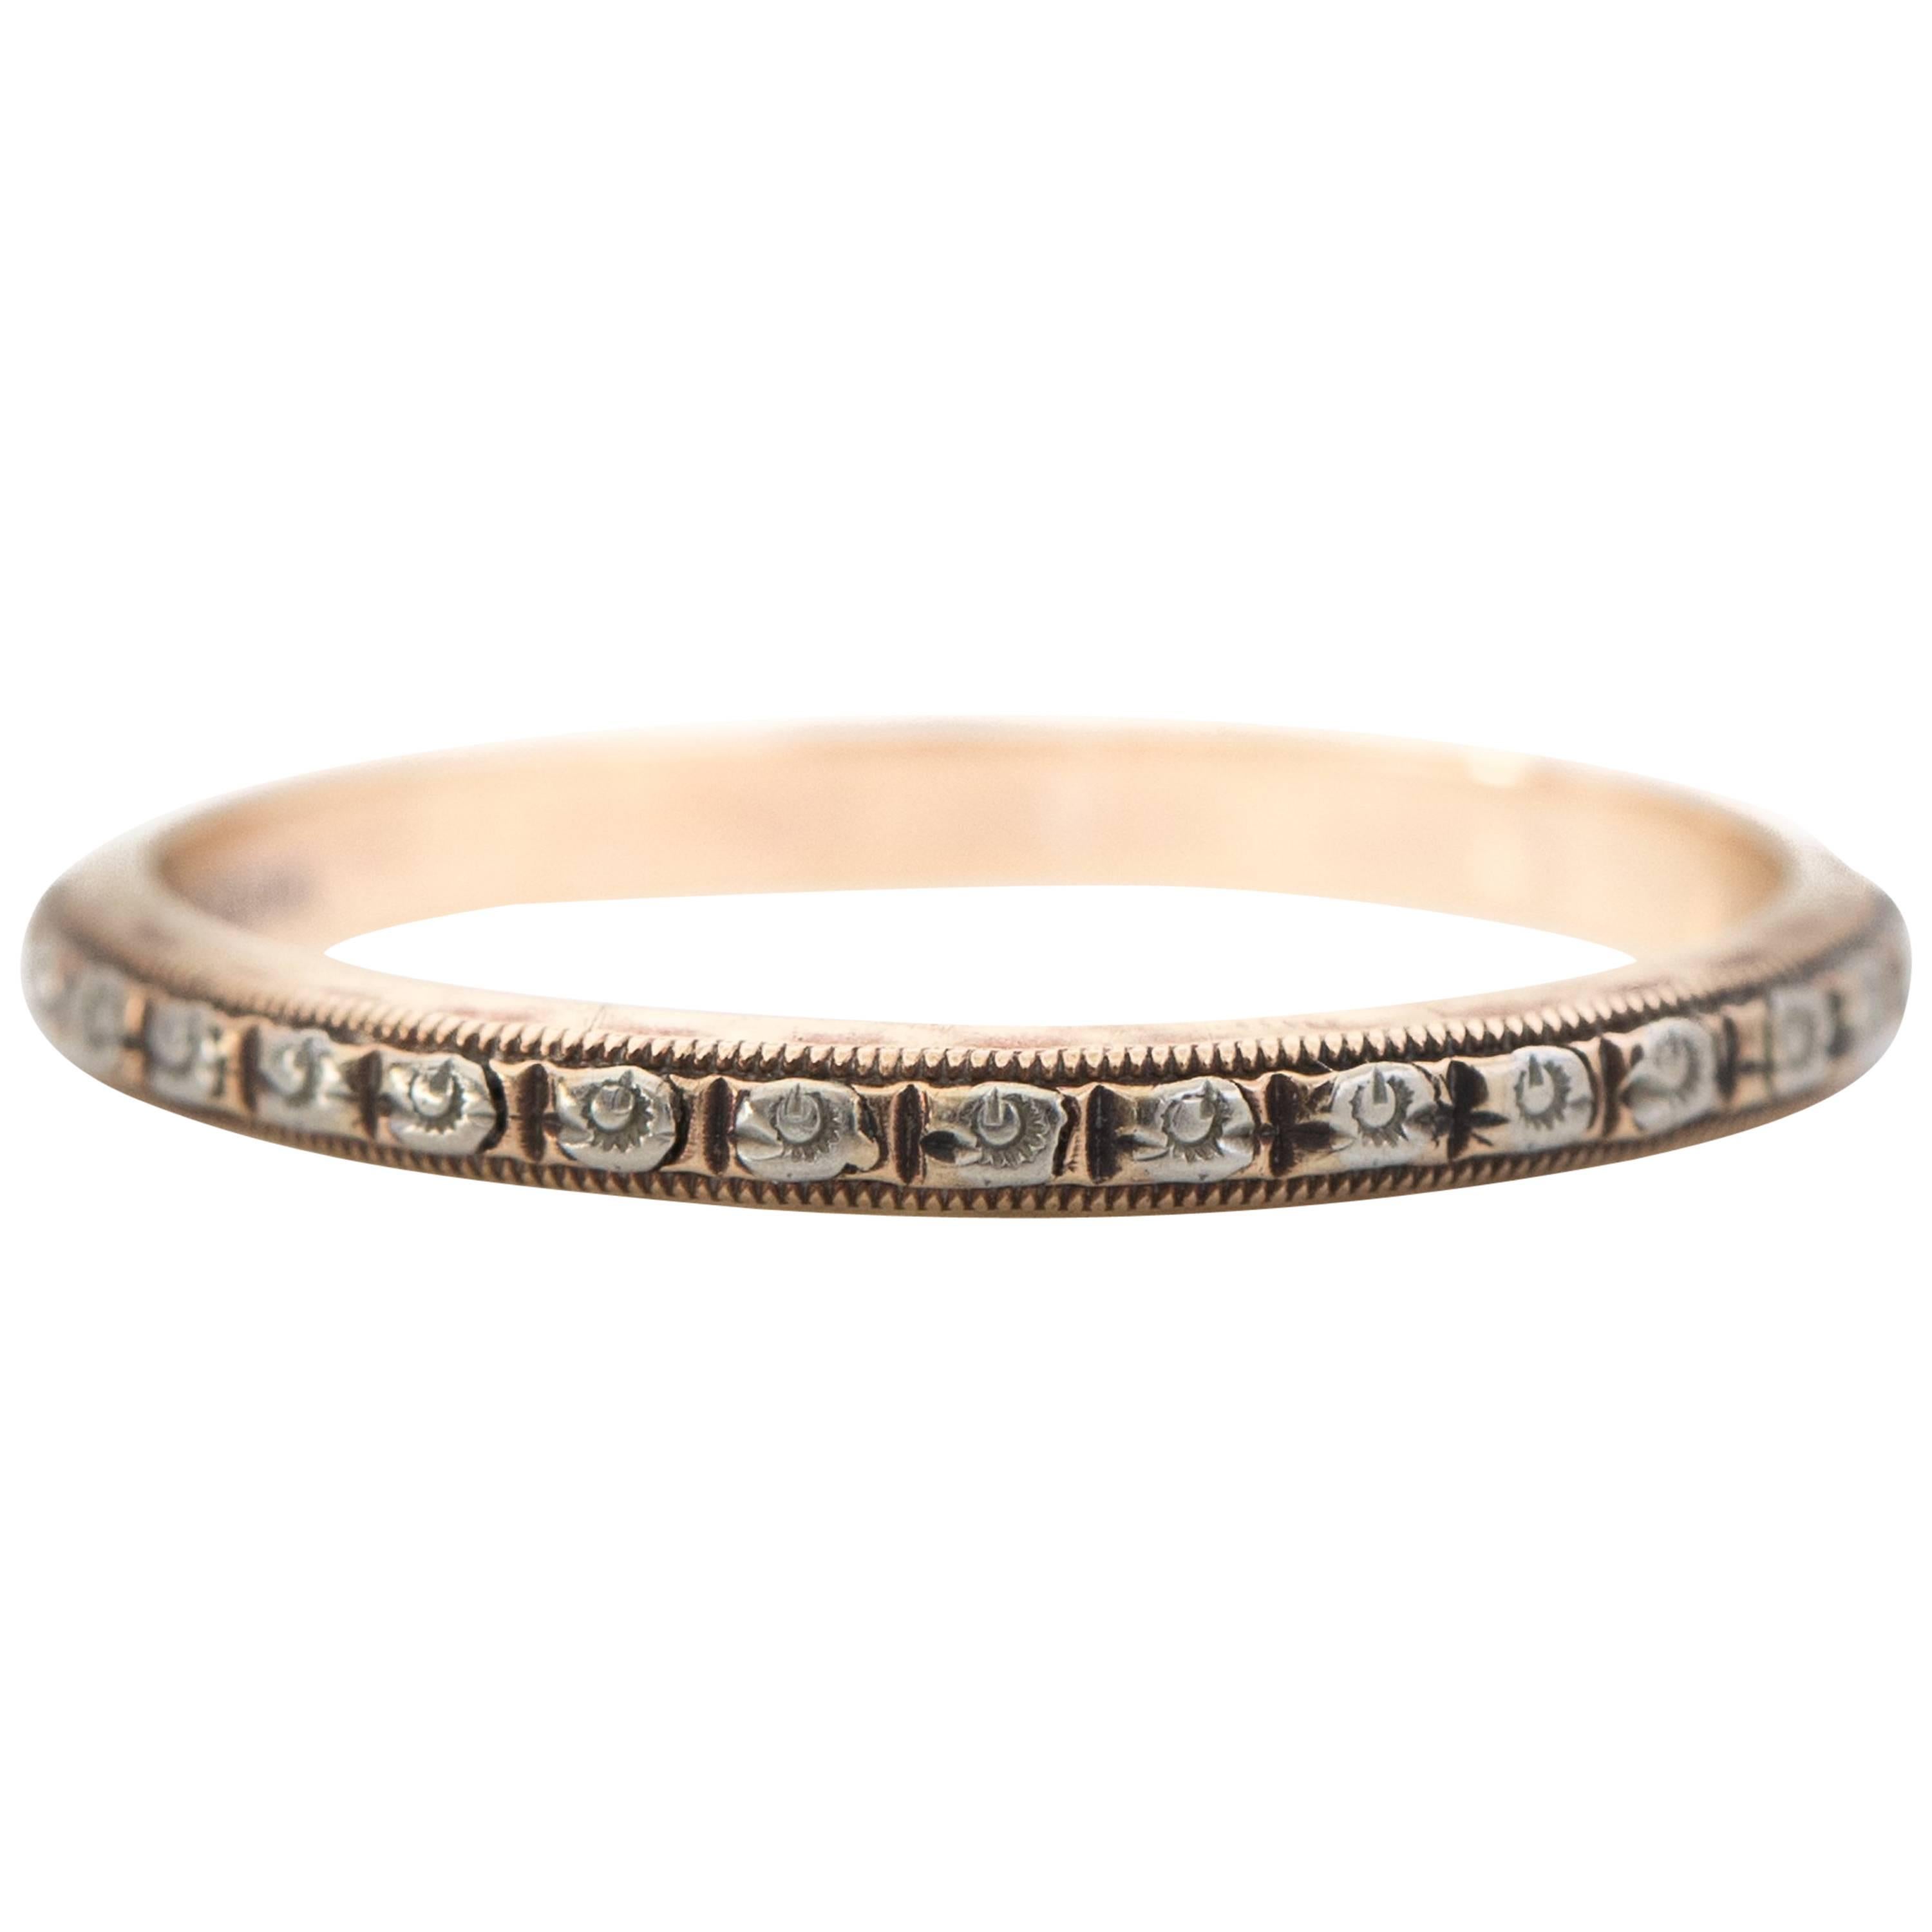 1930s White Rose Design 14 Karat White Gold Band Ring